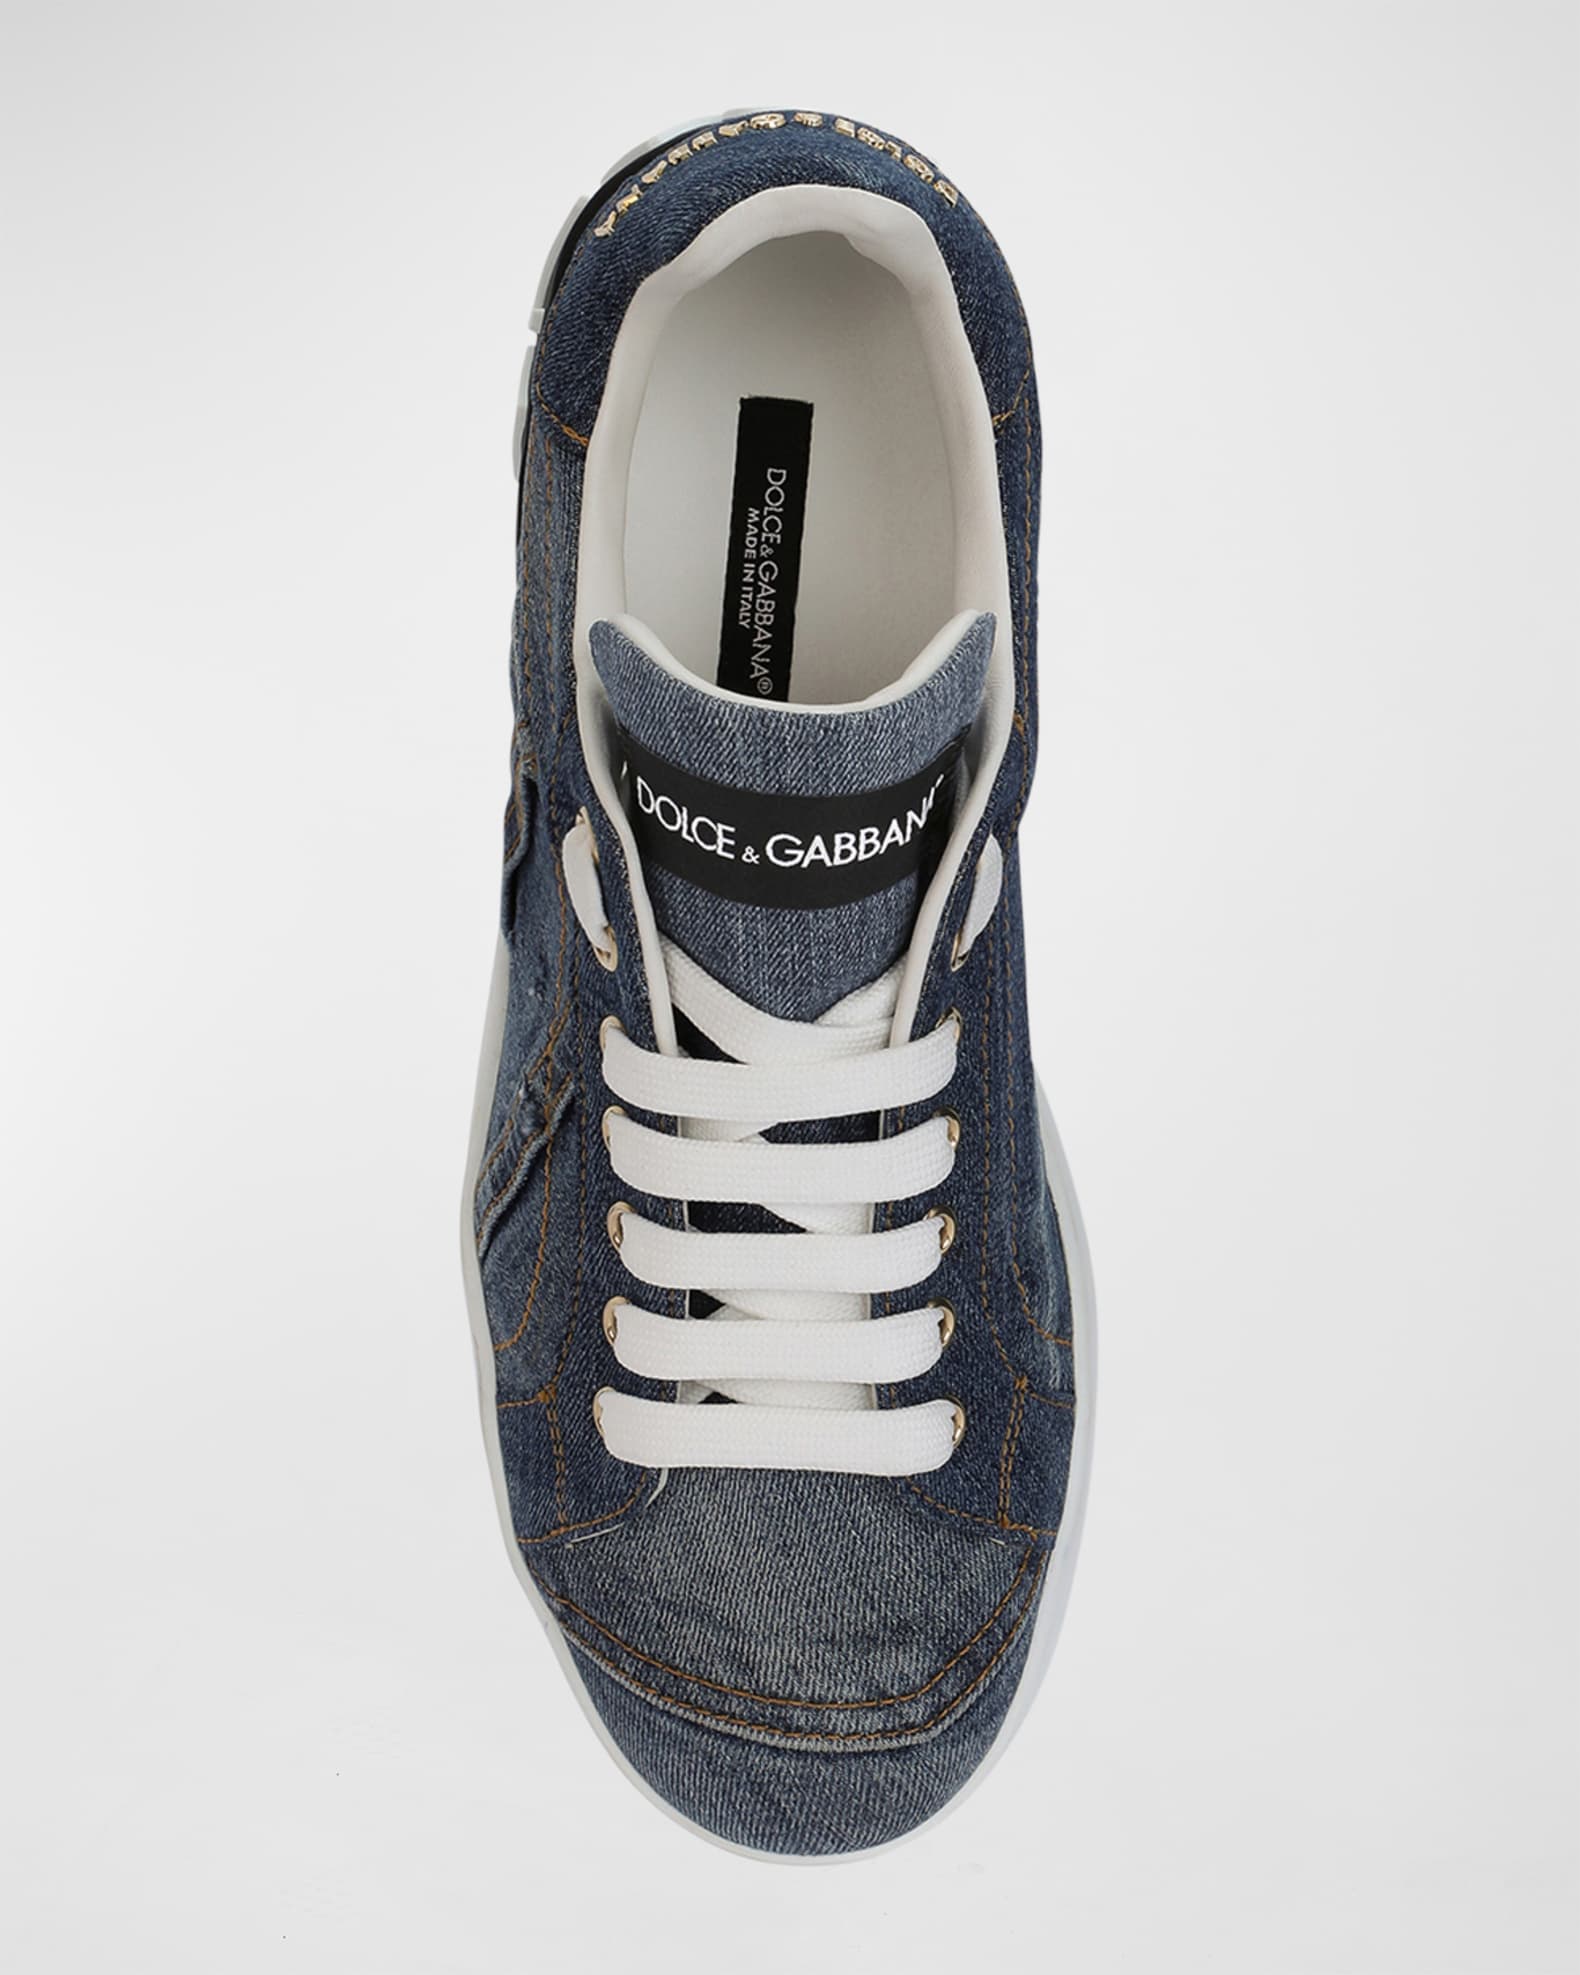 Dolce&Gabbana Portofino Denim Patchwork Sneakers | Neiman Marcus